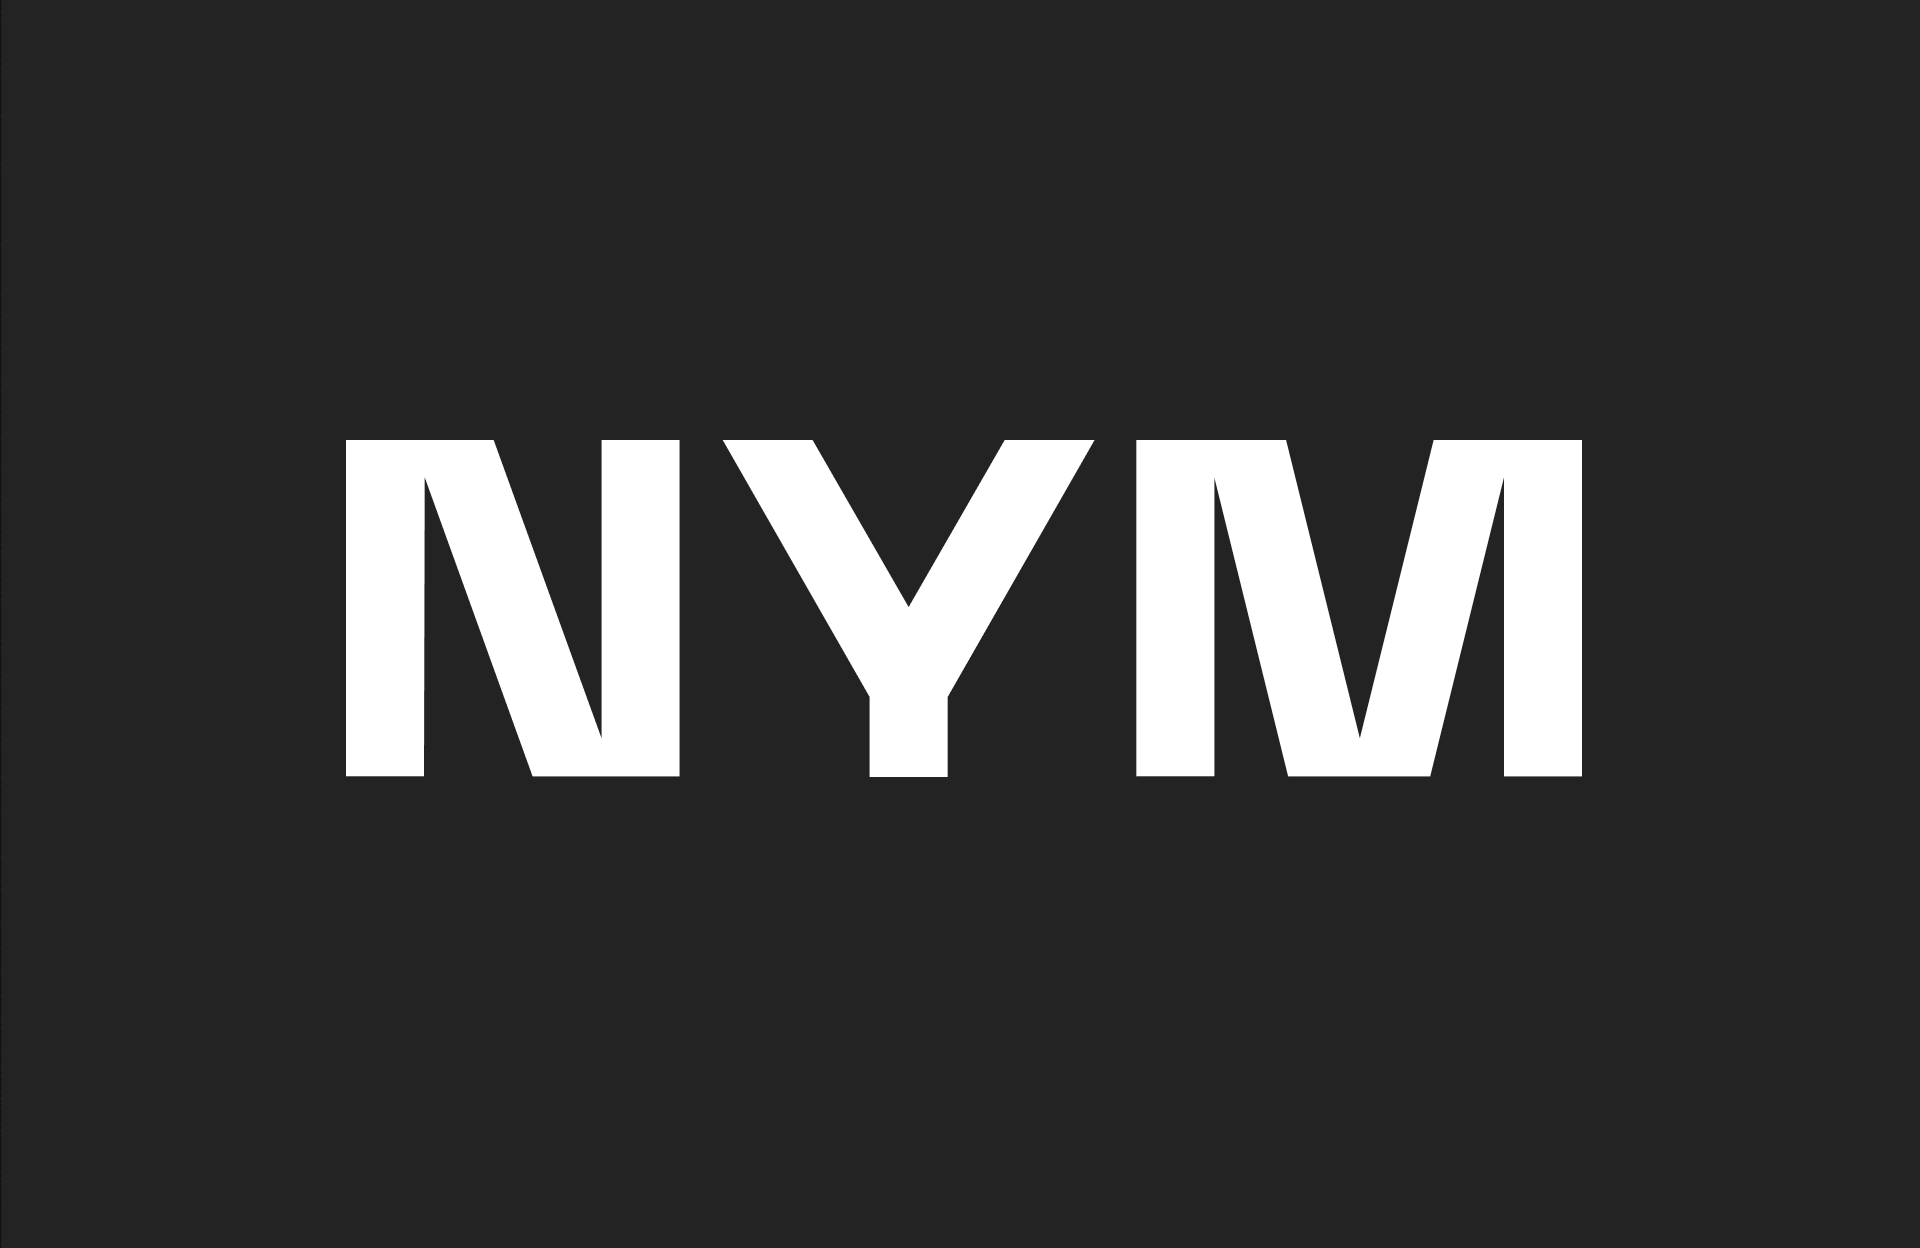 Nym – next generation privacy infrastructure